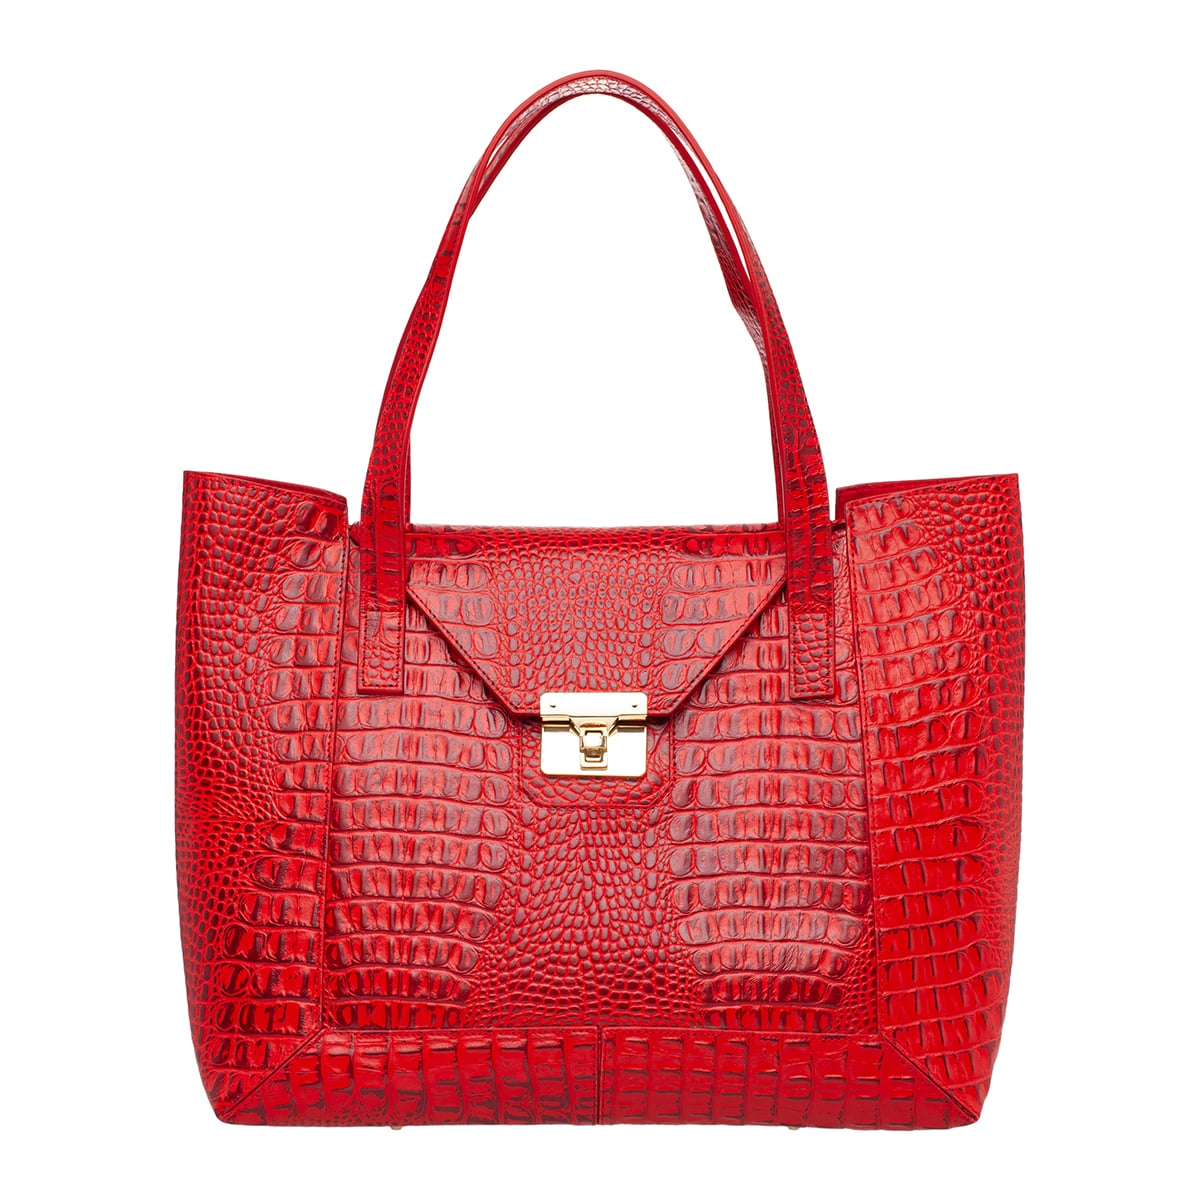 Женская сумка Filby Red